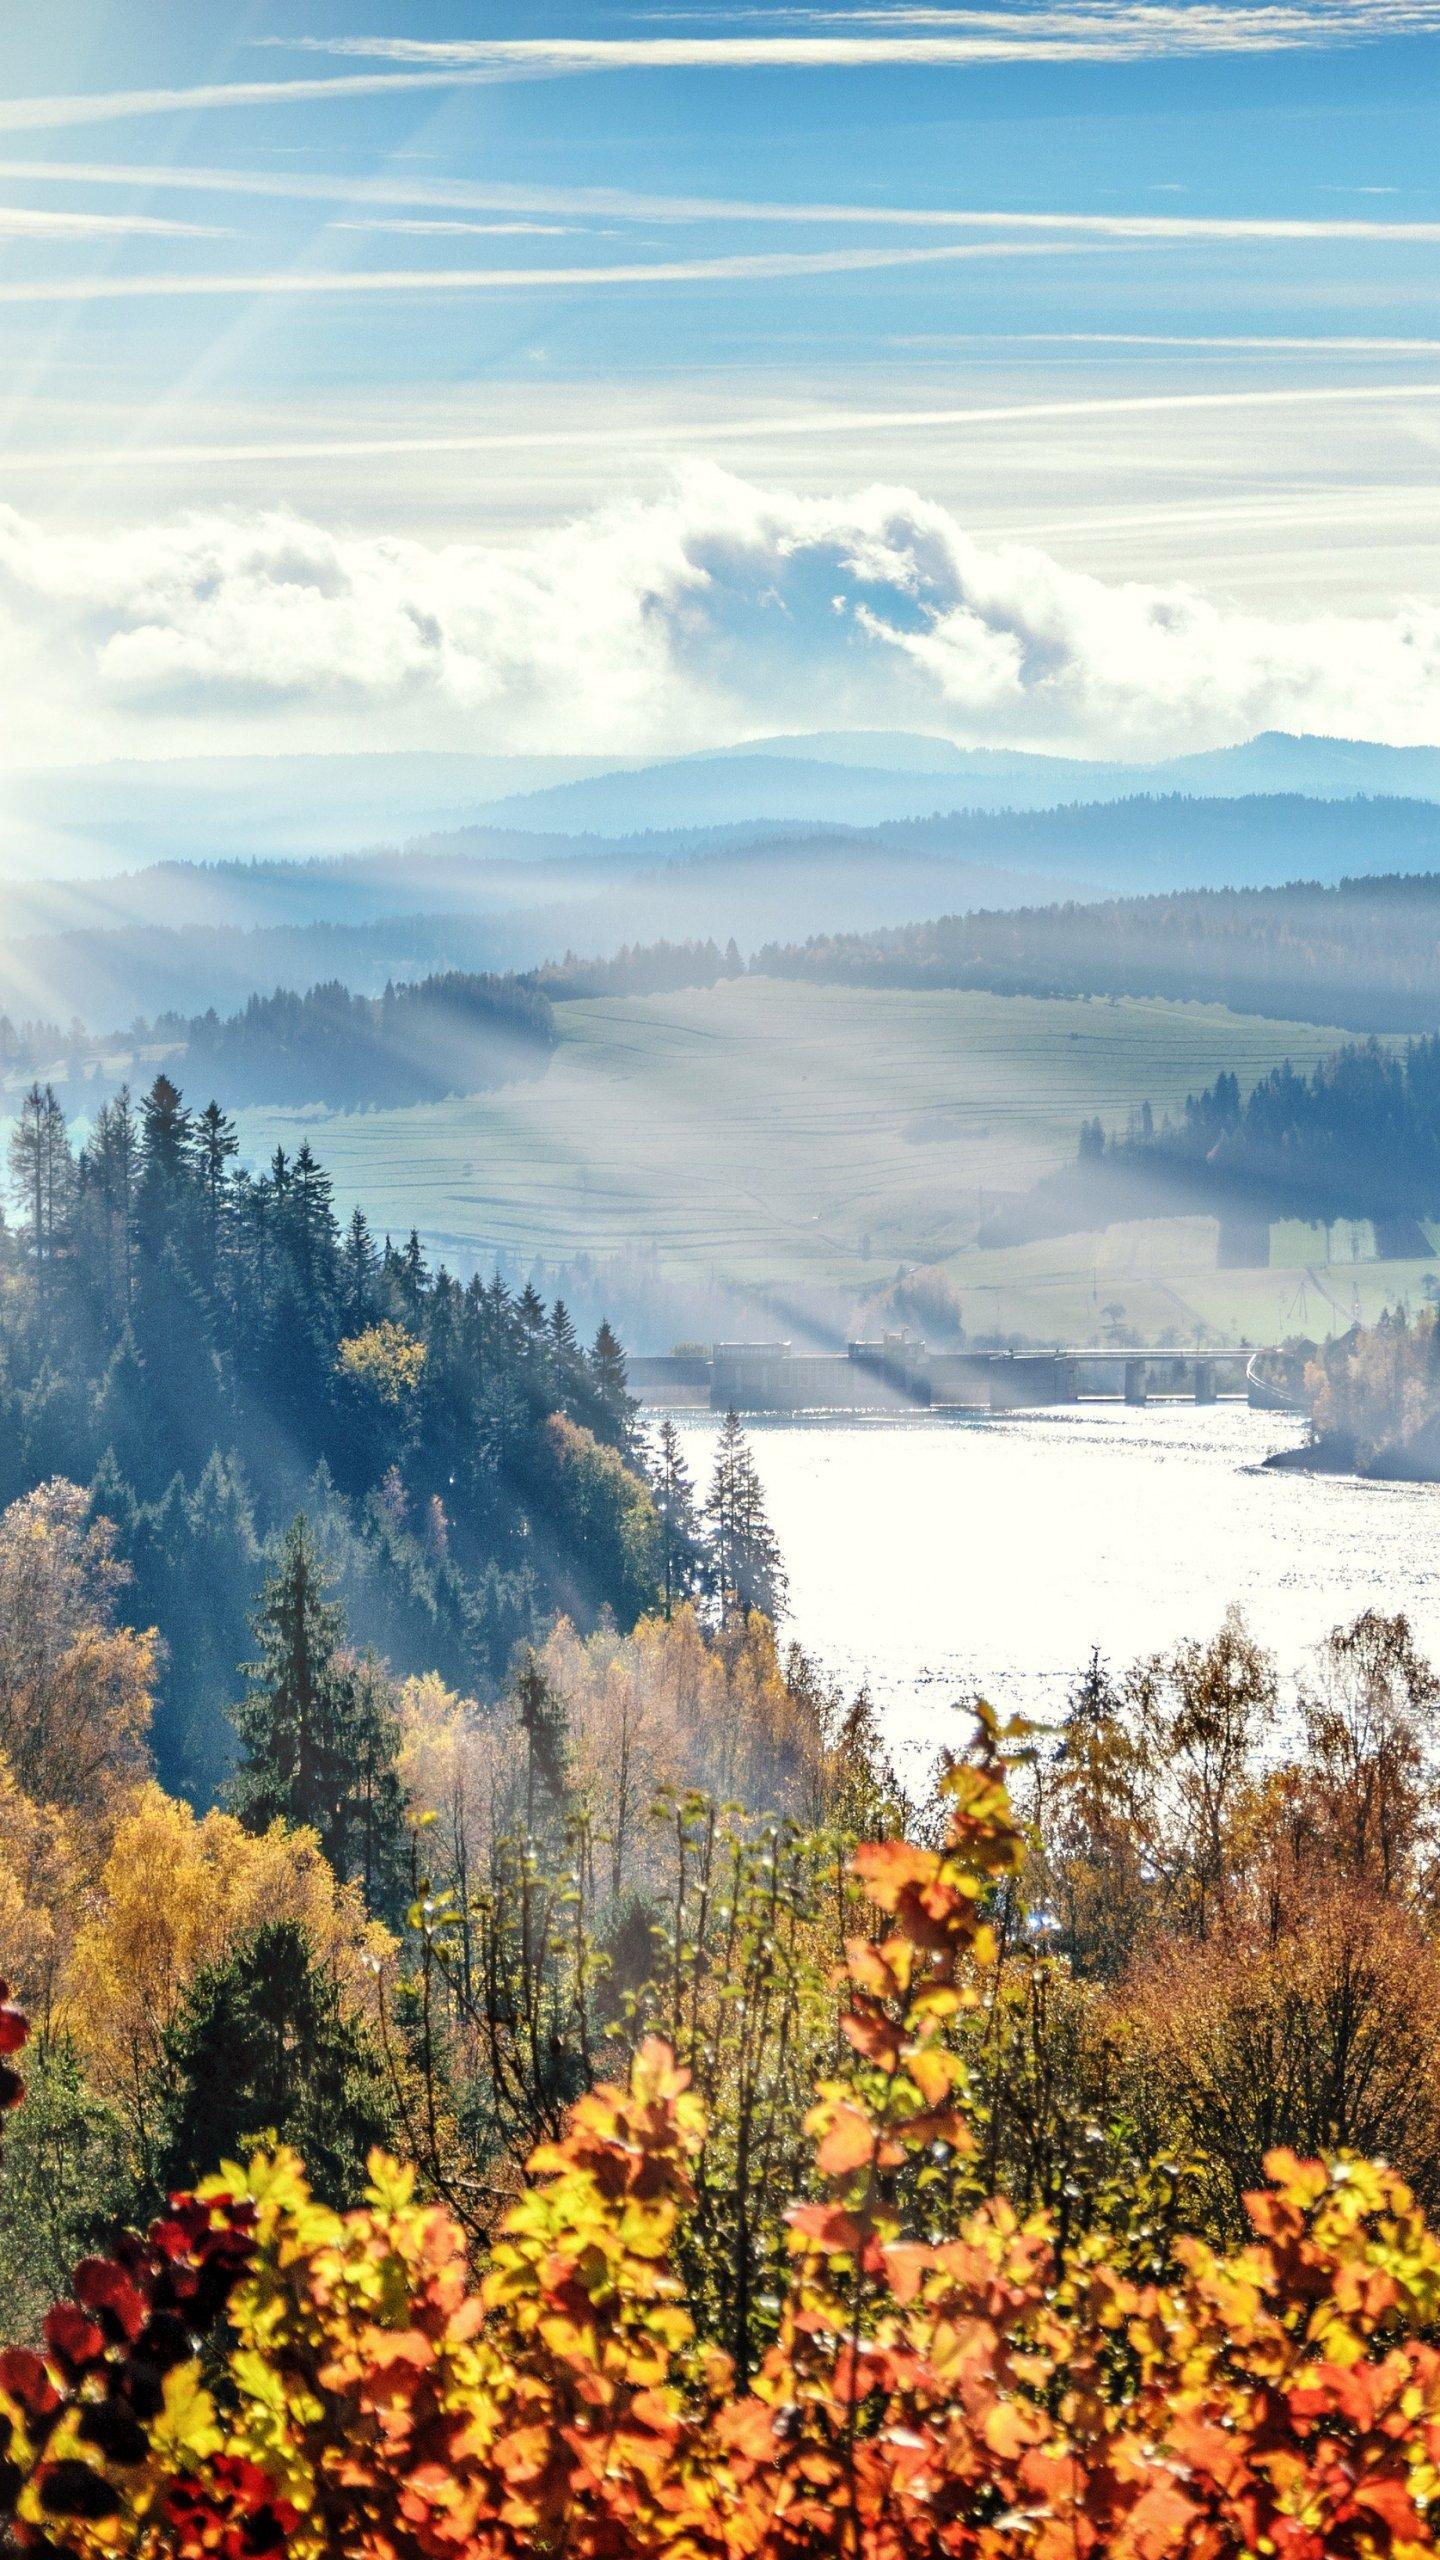 Autumn Forest River Scene Wallpaper, Android & Desktop Background